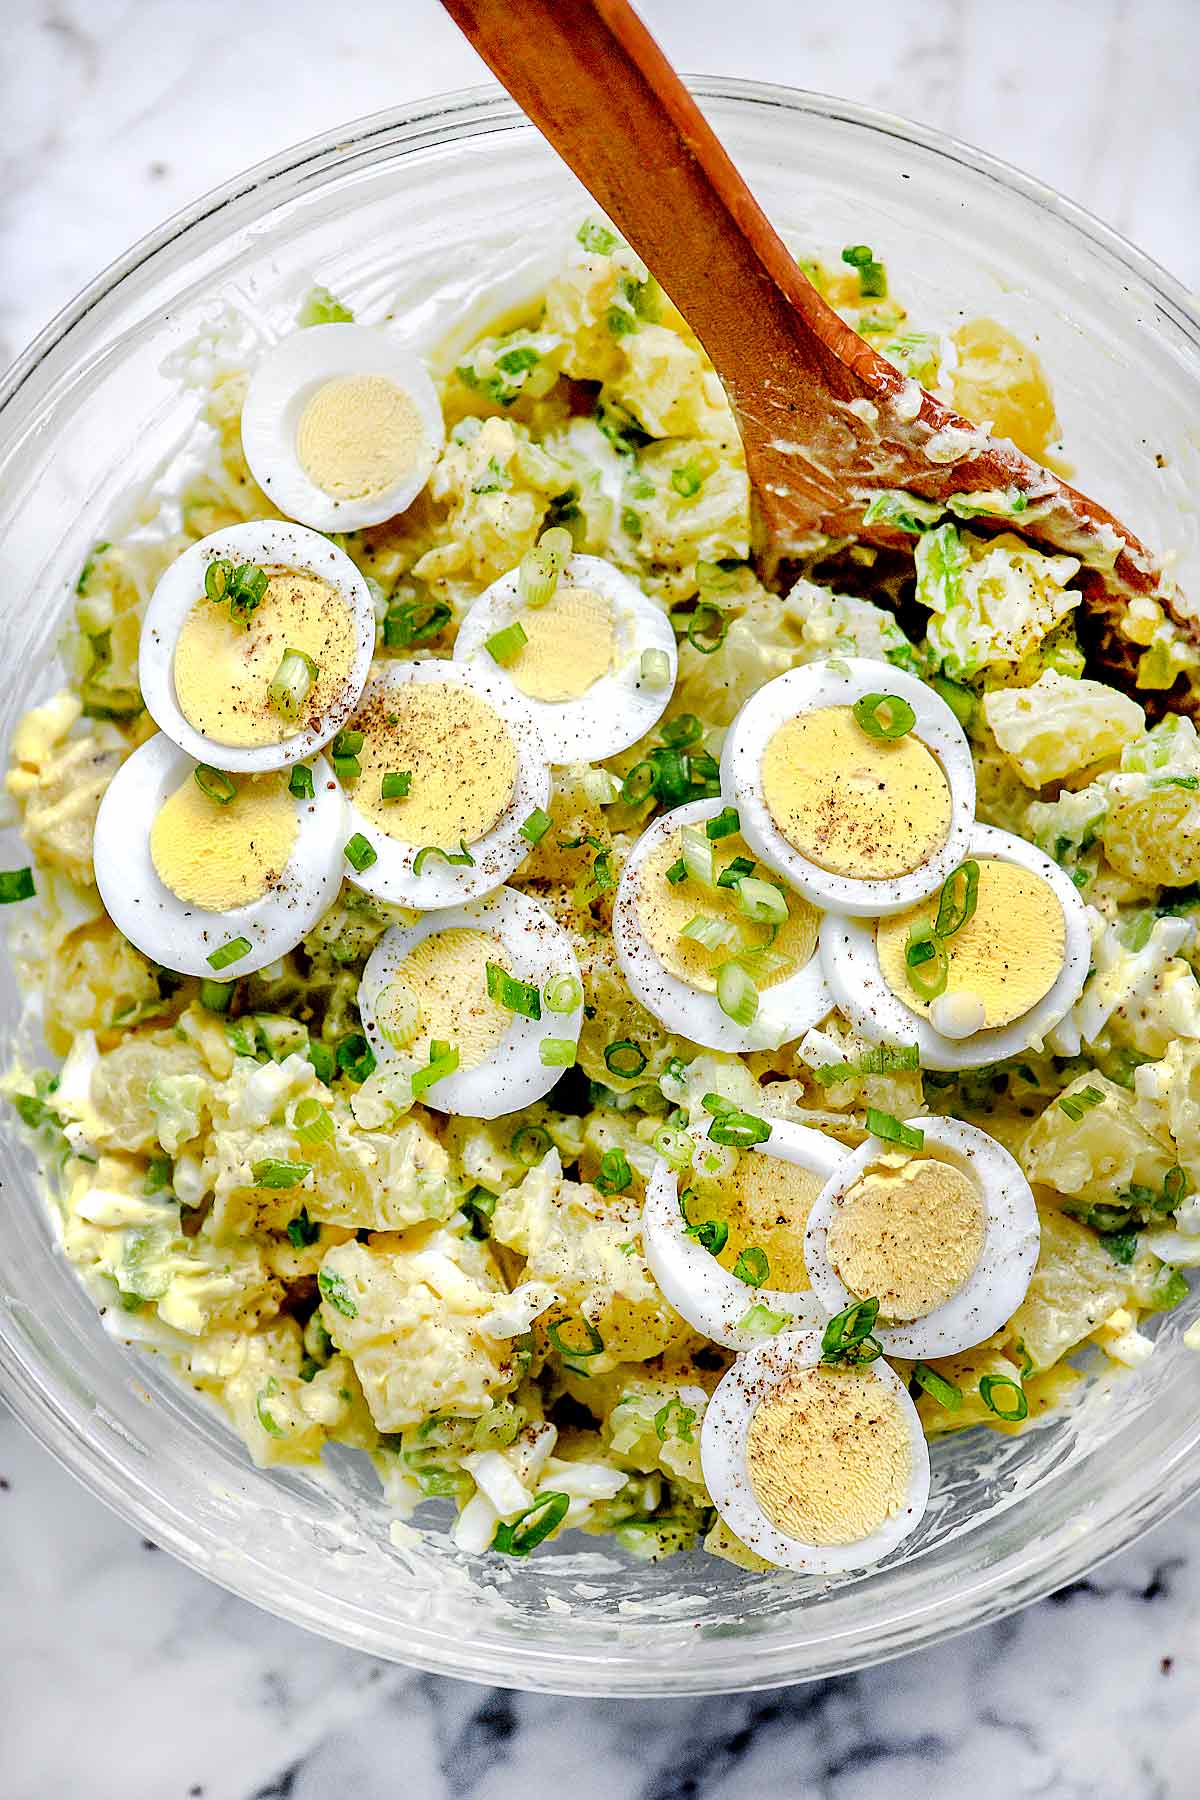 The Best Potato Salad Foodiecrush.com 003 2 